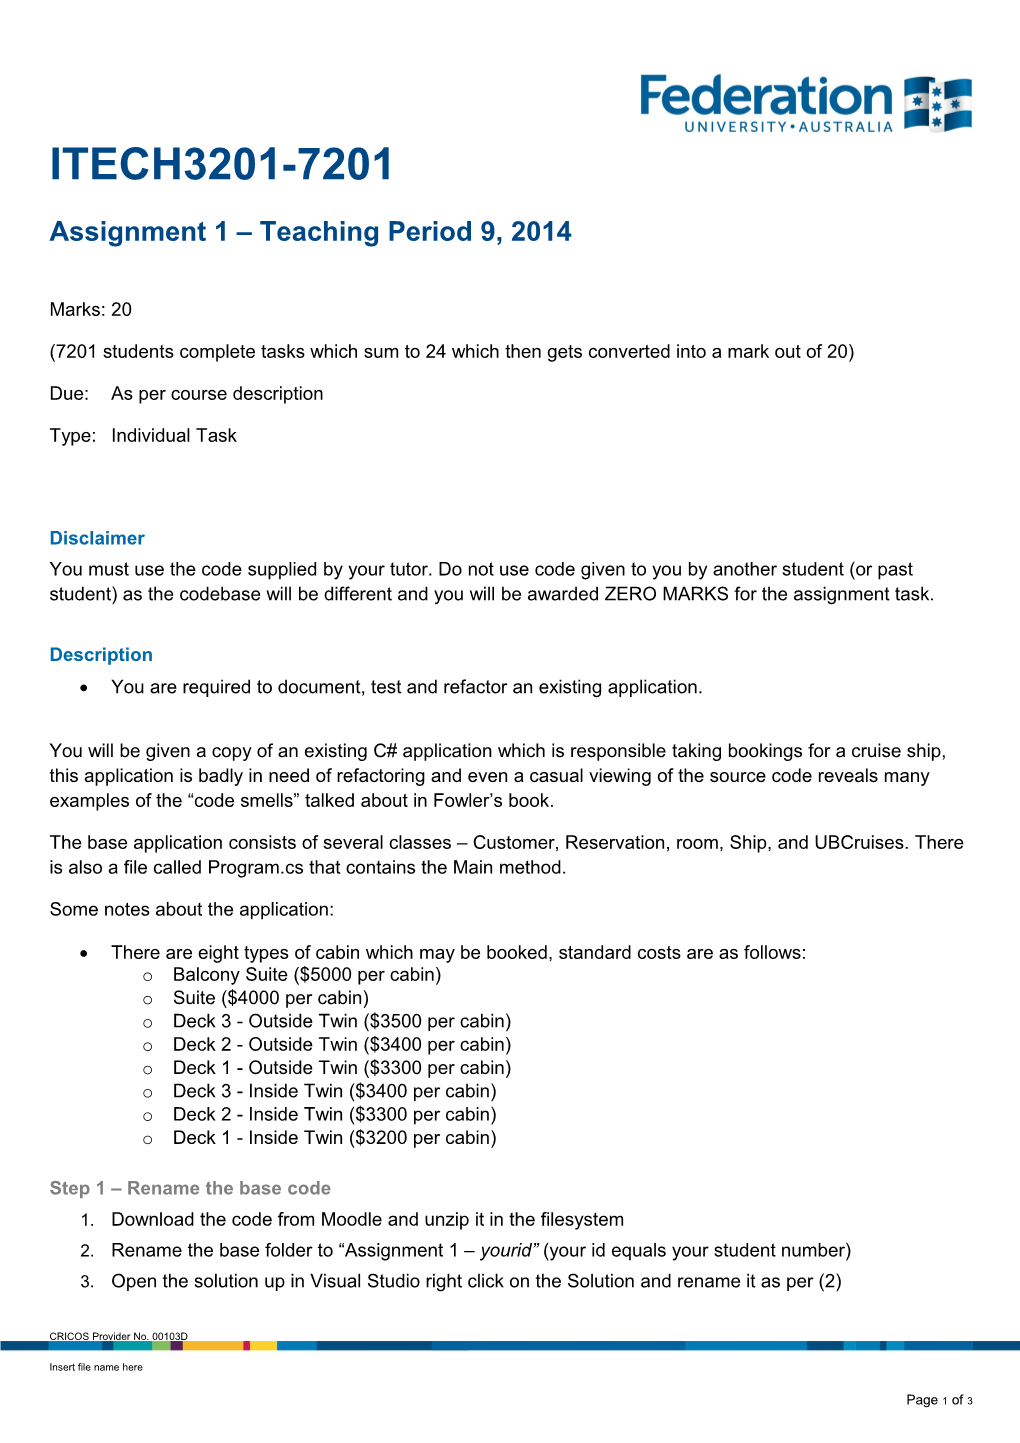 Assignment 1 Teaching Period 9, 2014